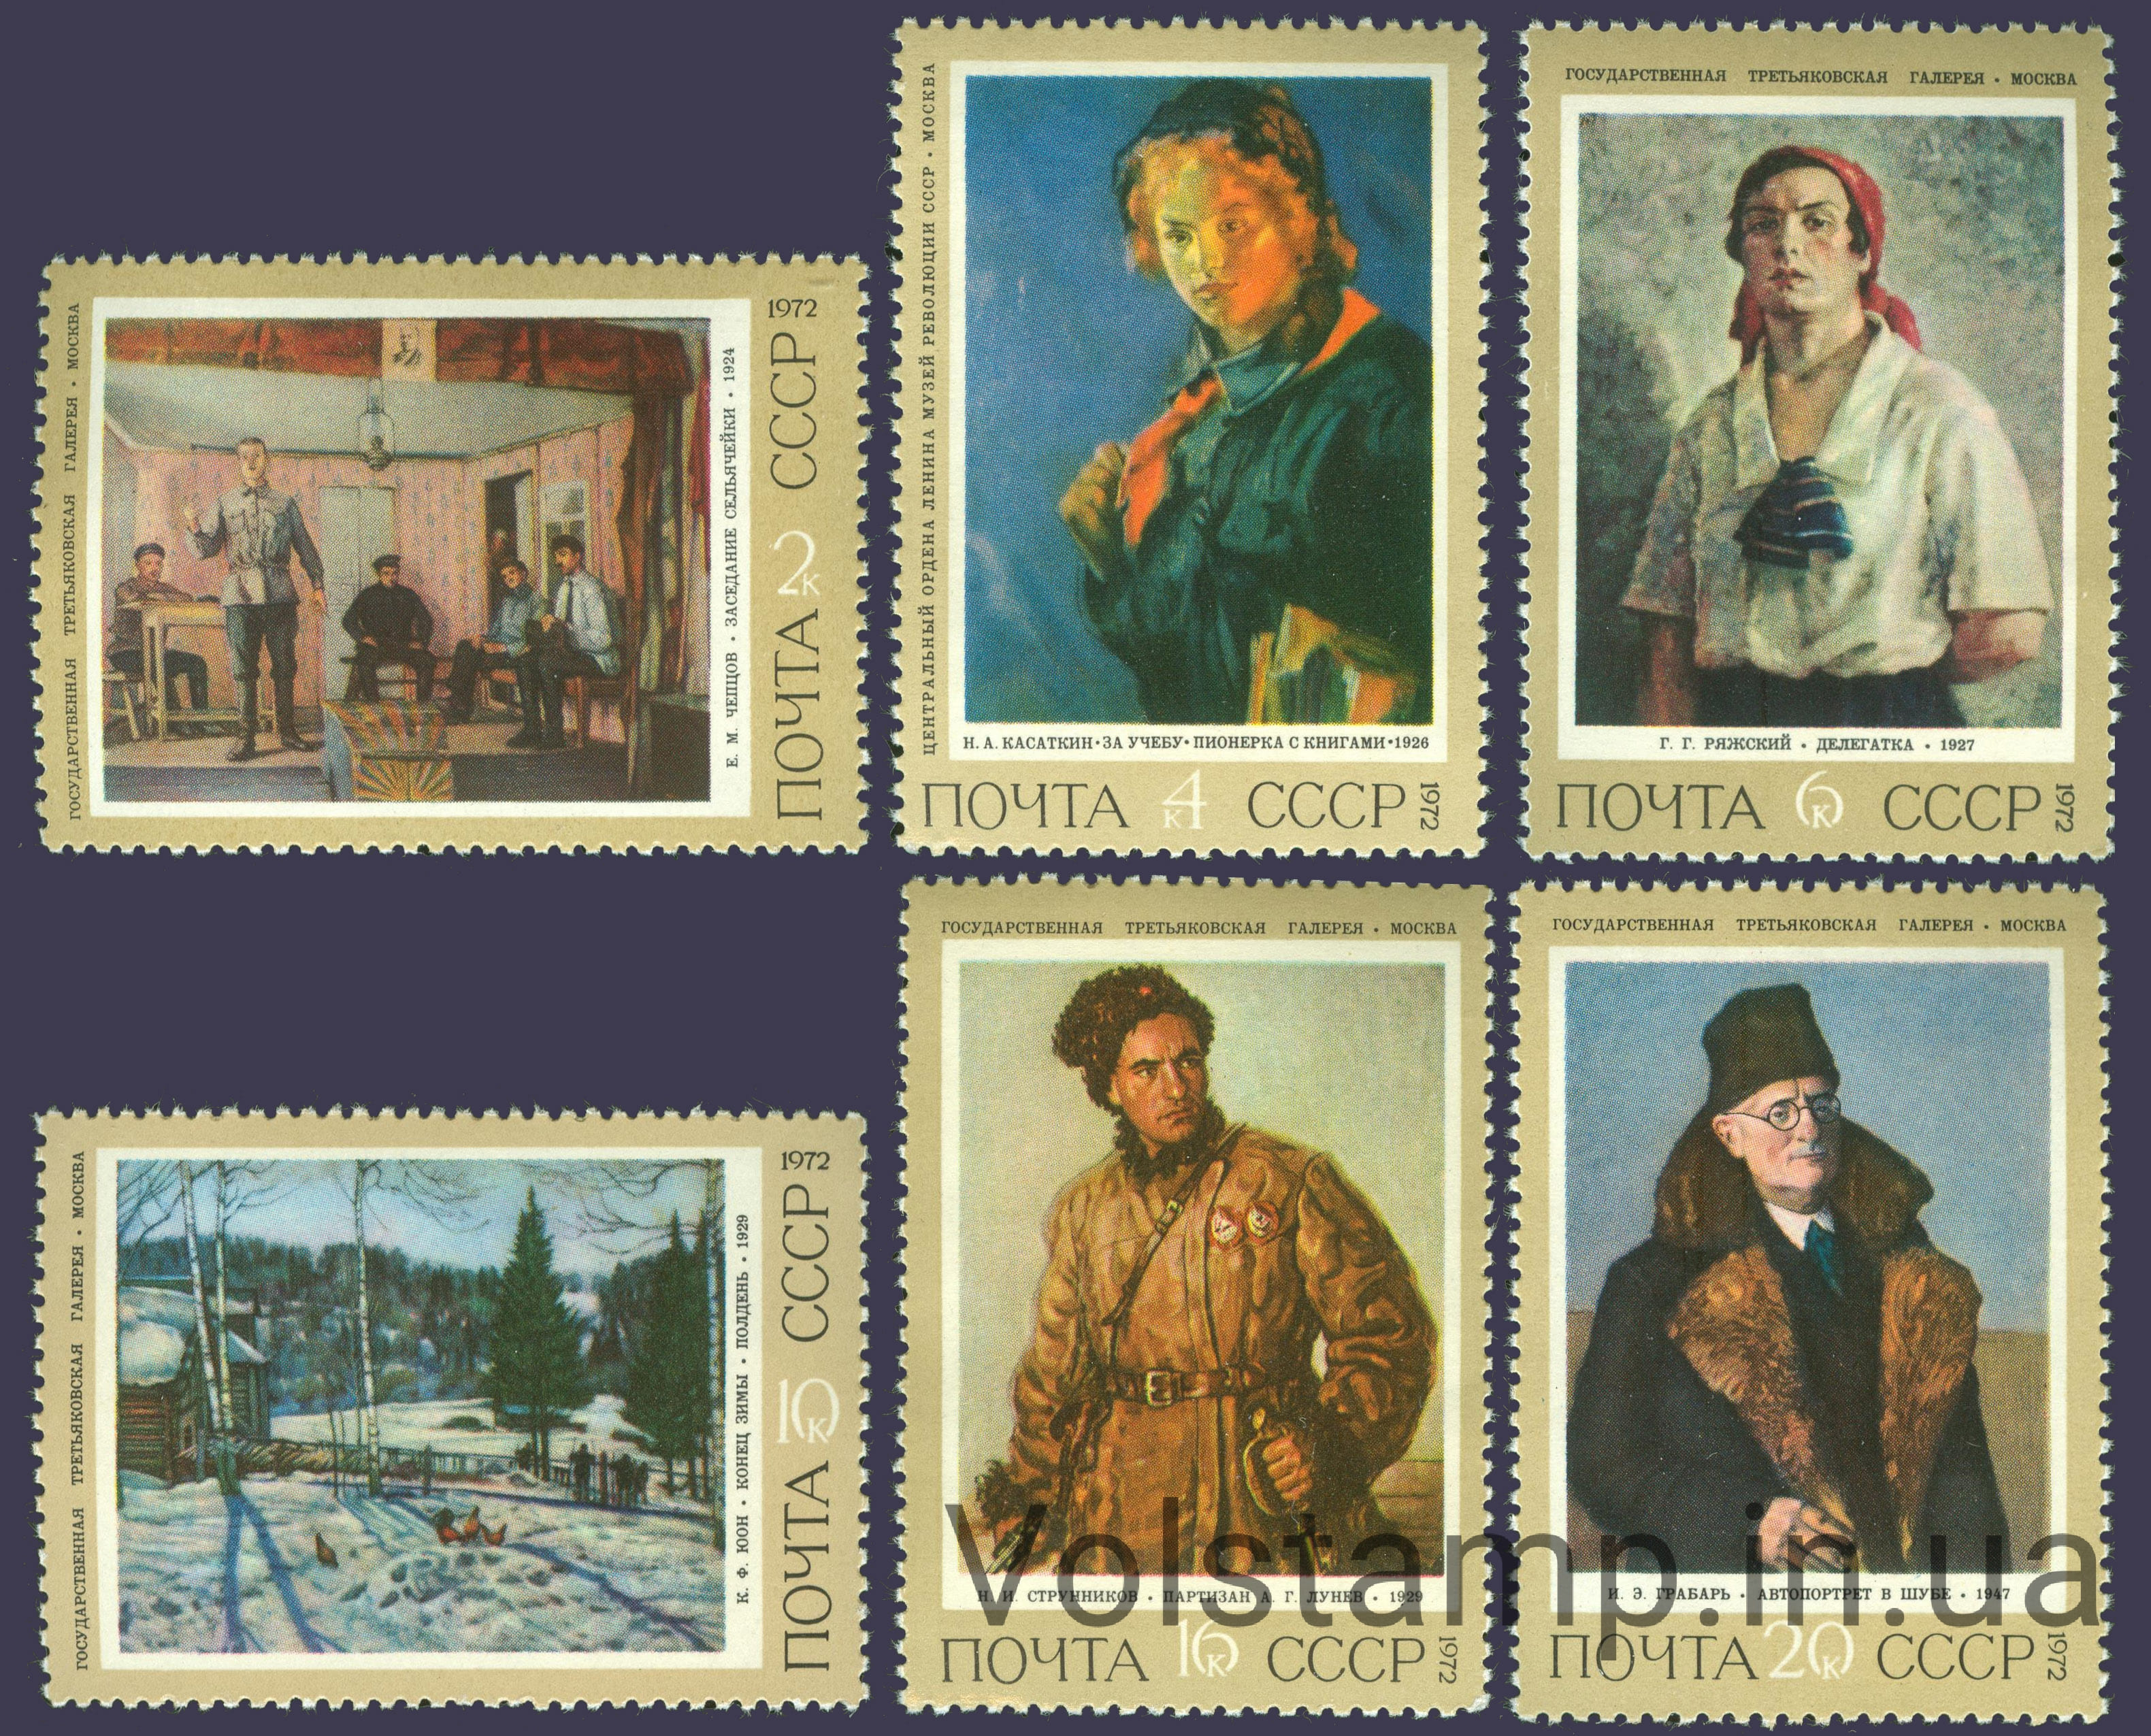 1972 stamp Series Soviet painting №4120-4125